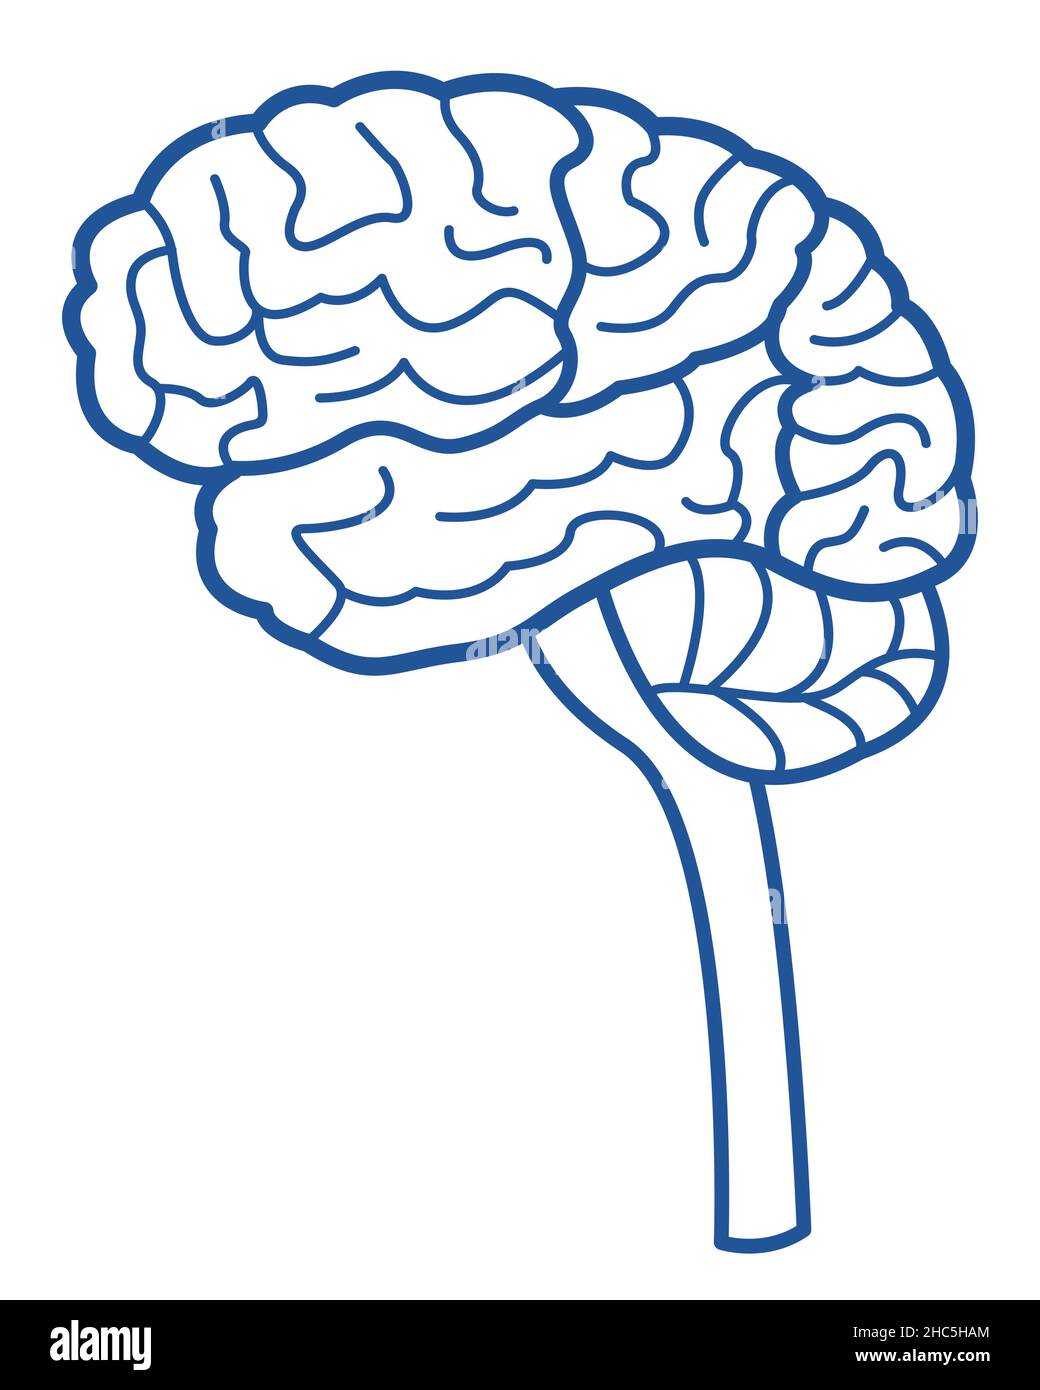 Human brain side view contour illustration Stock Vector